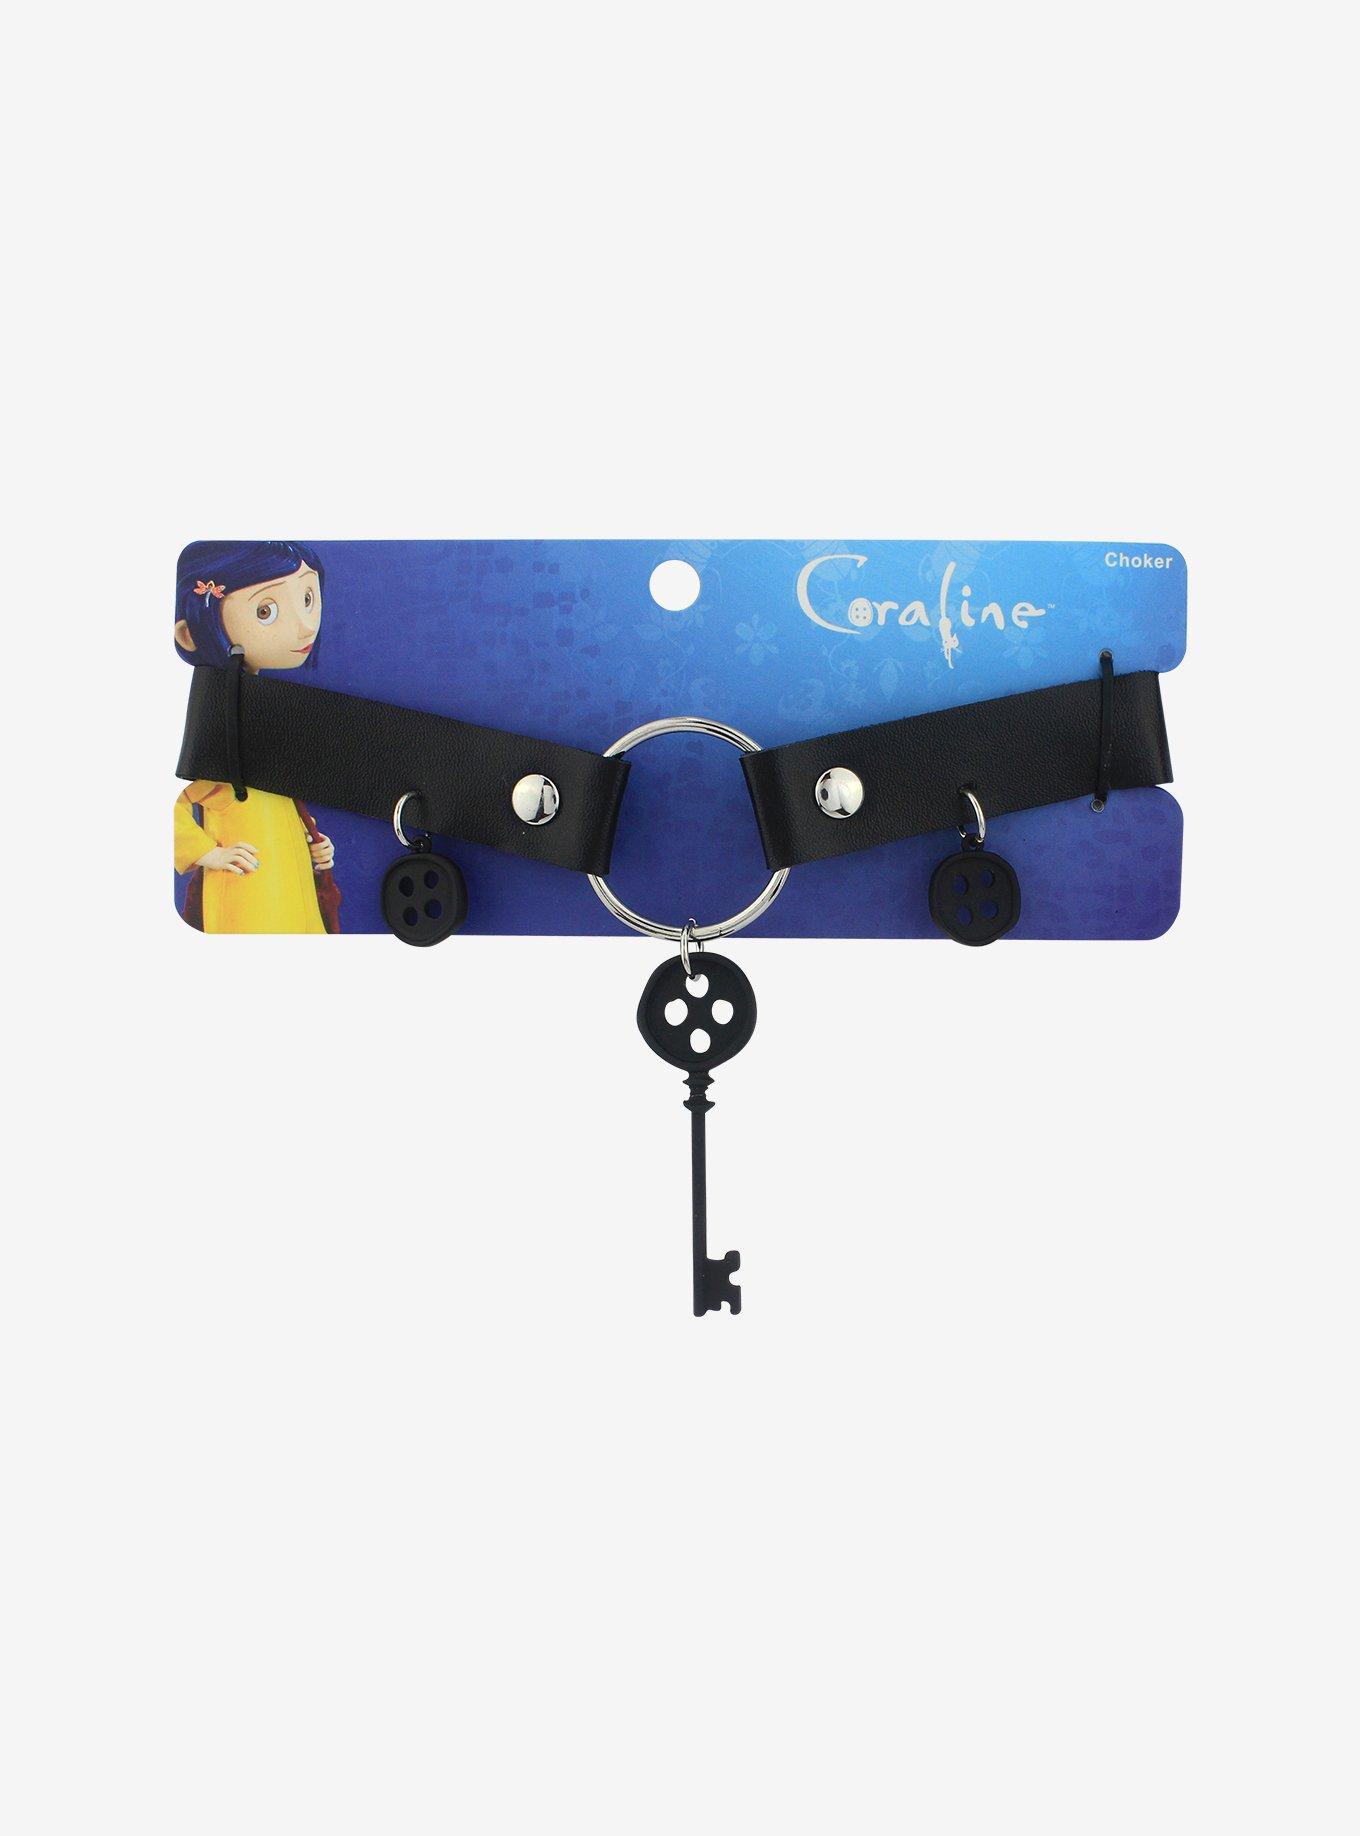 Coraline Key Button | Hot